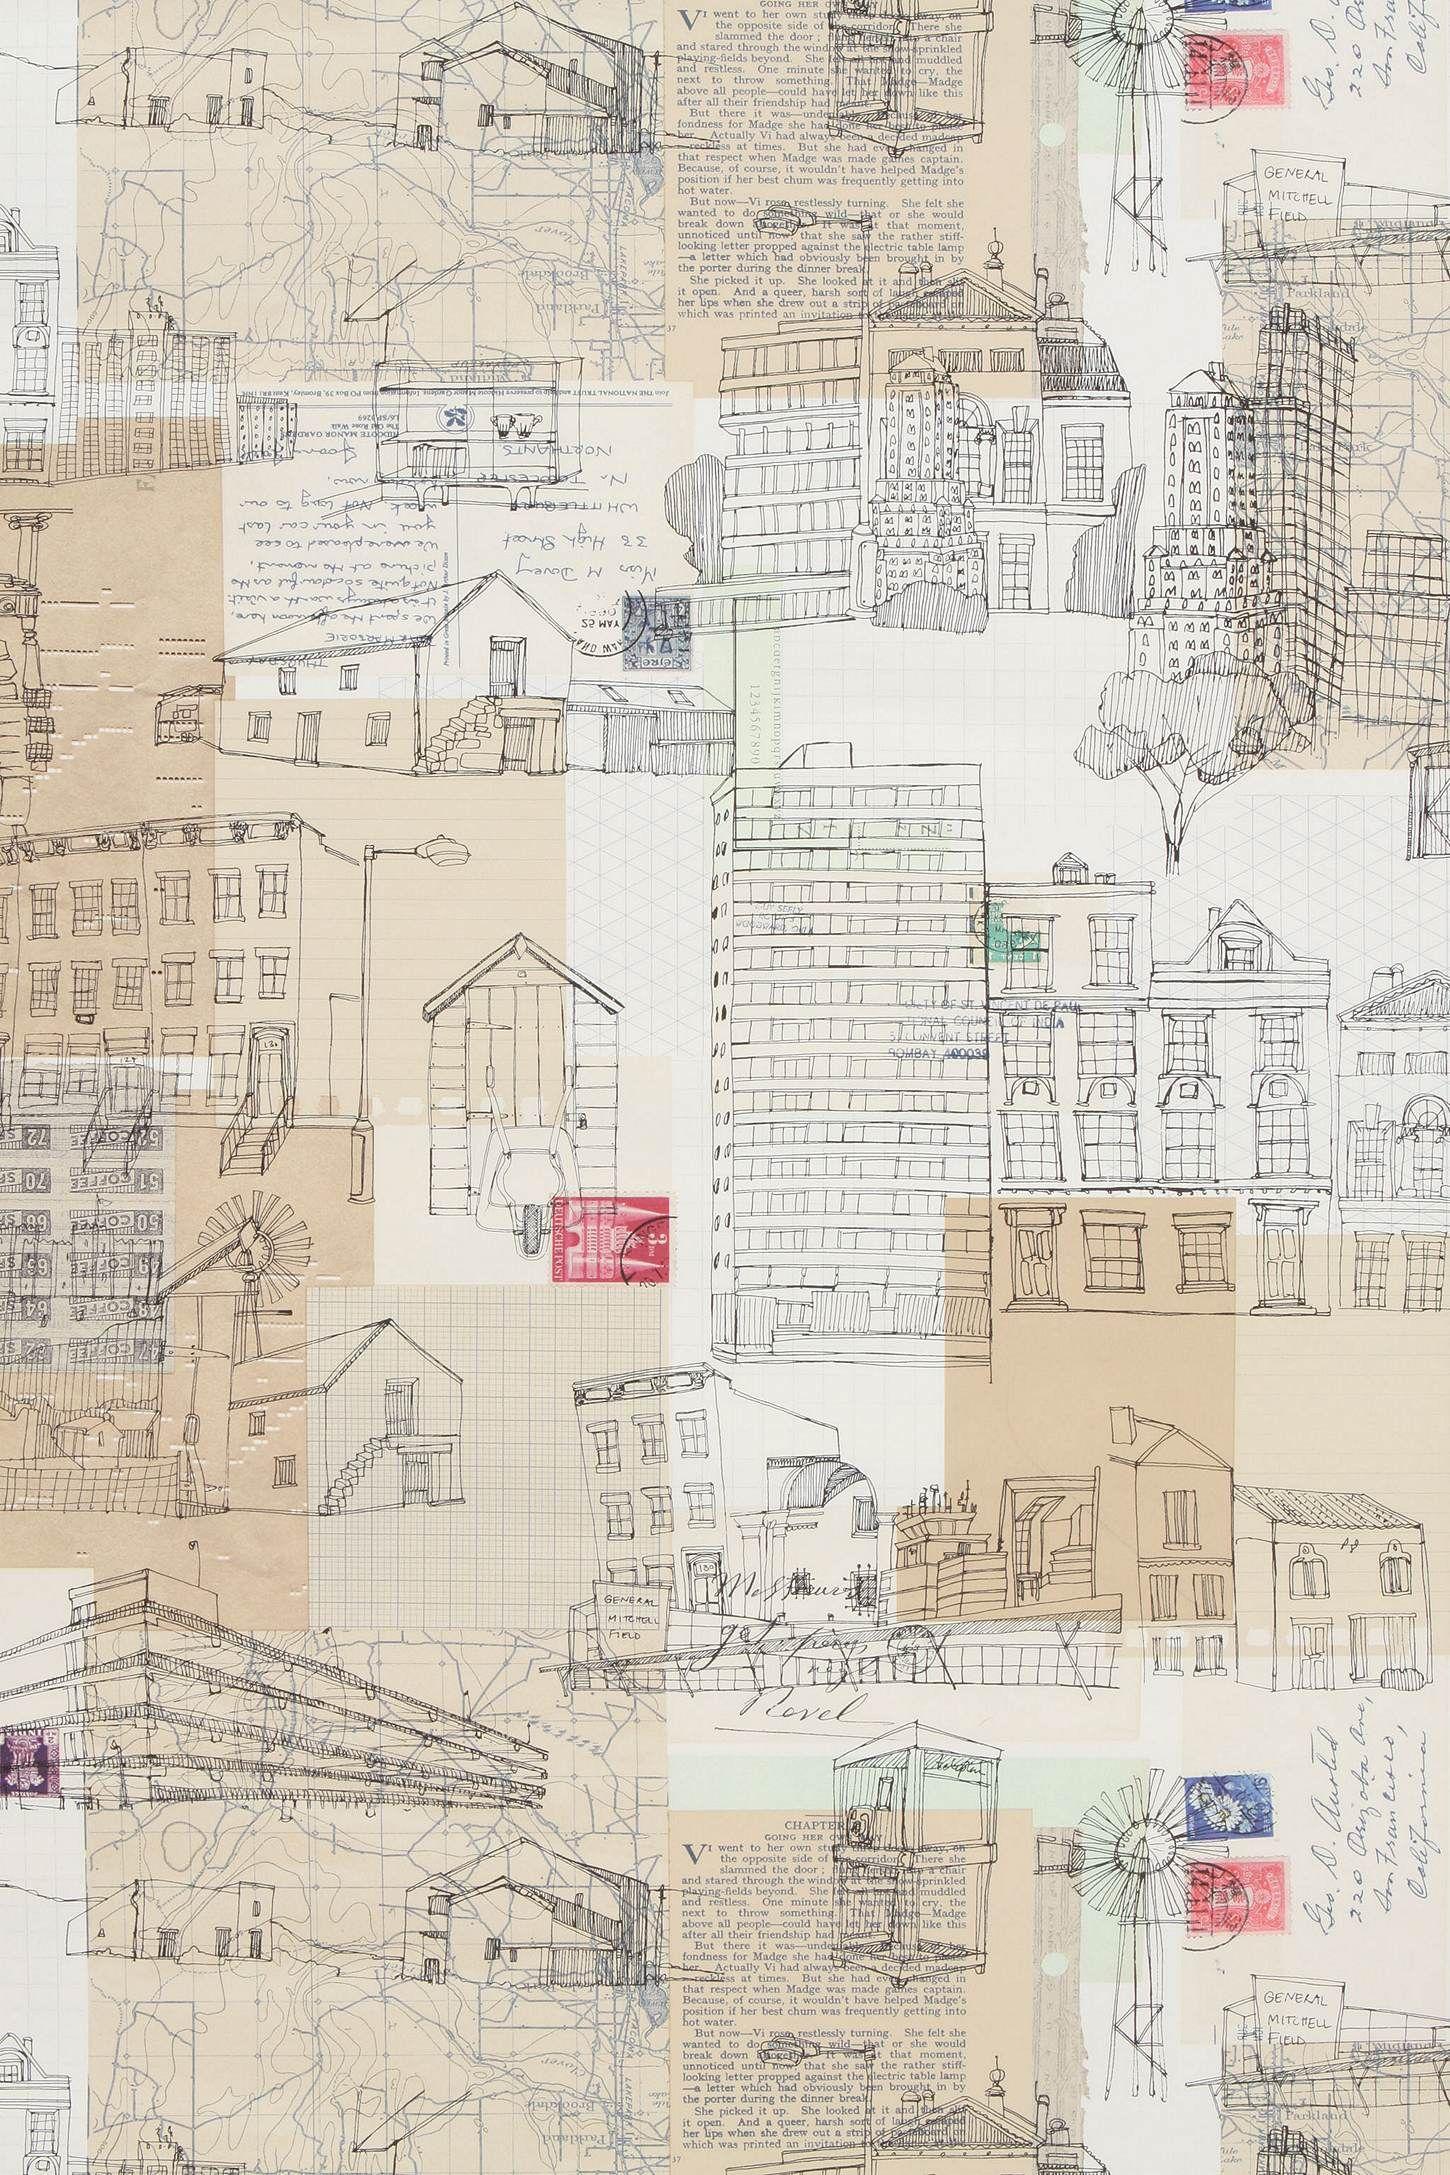 Composed City Wallpaper. Architecture wallpaper, City wallpaper, Architecture drawing